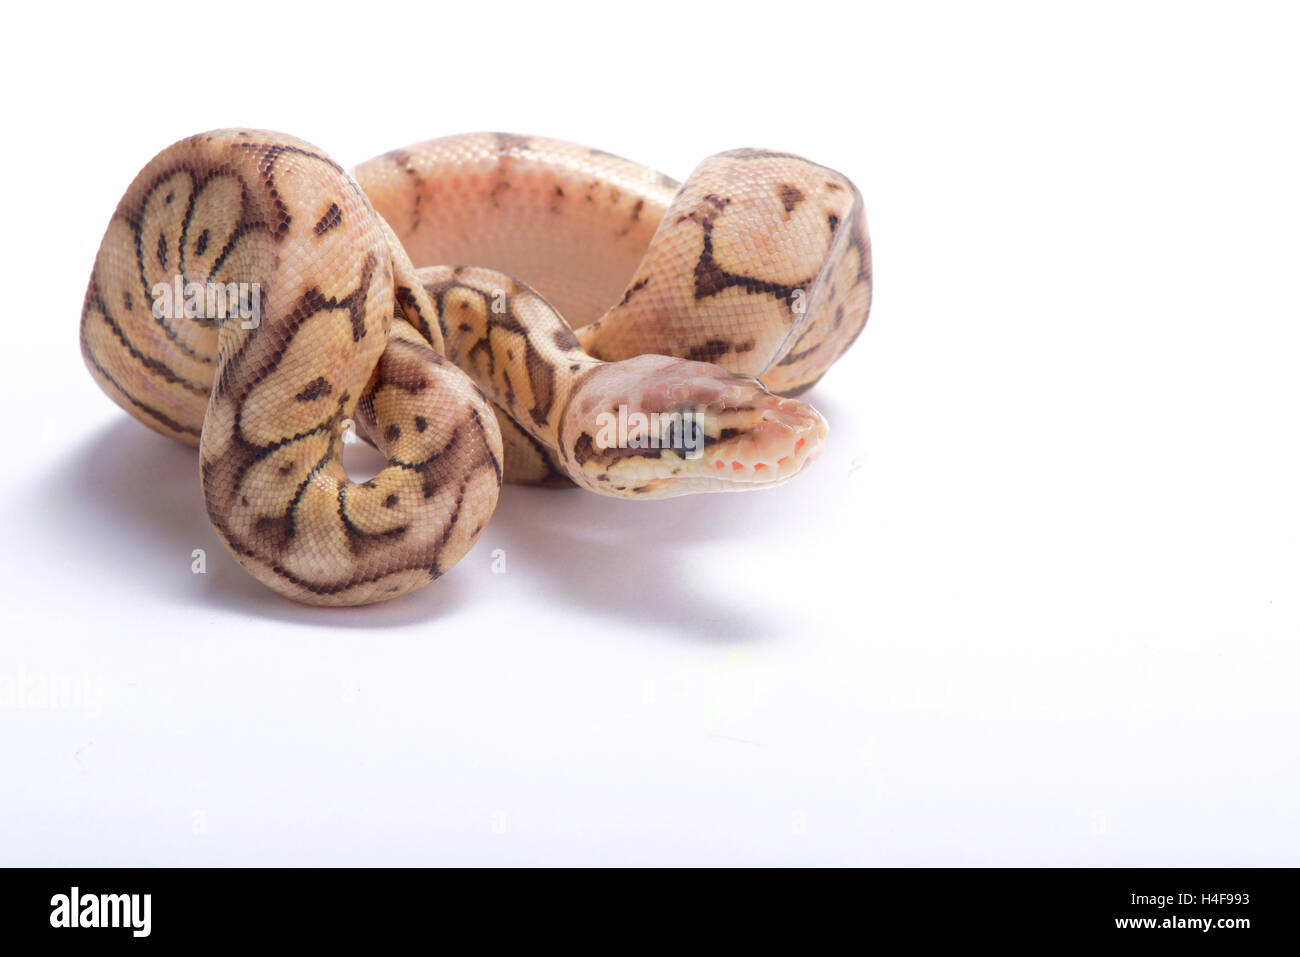 Ball python,Python regius, Stock Photo